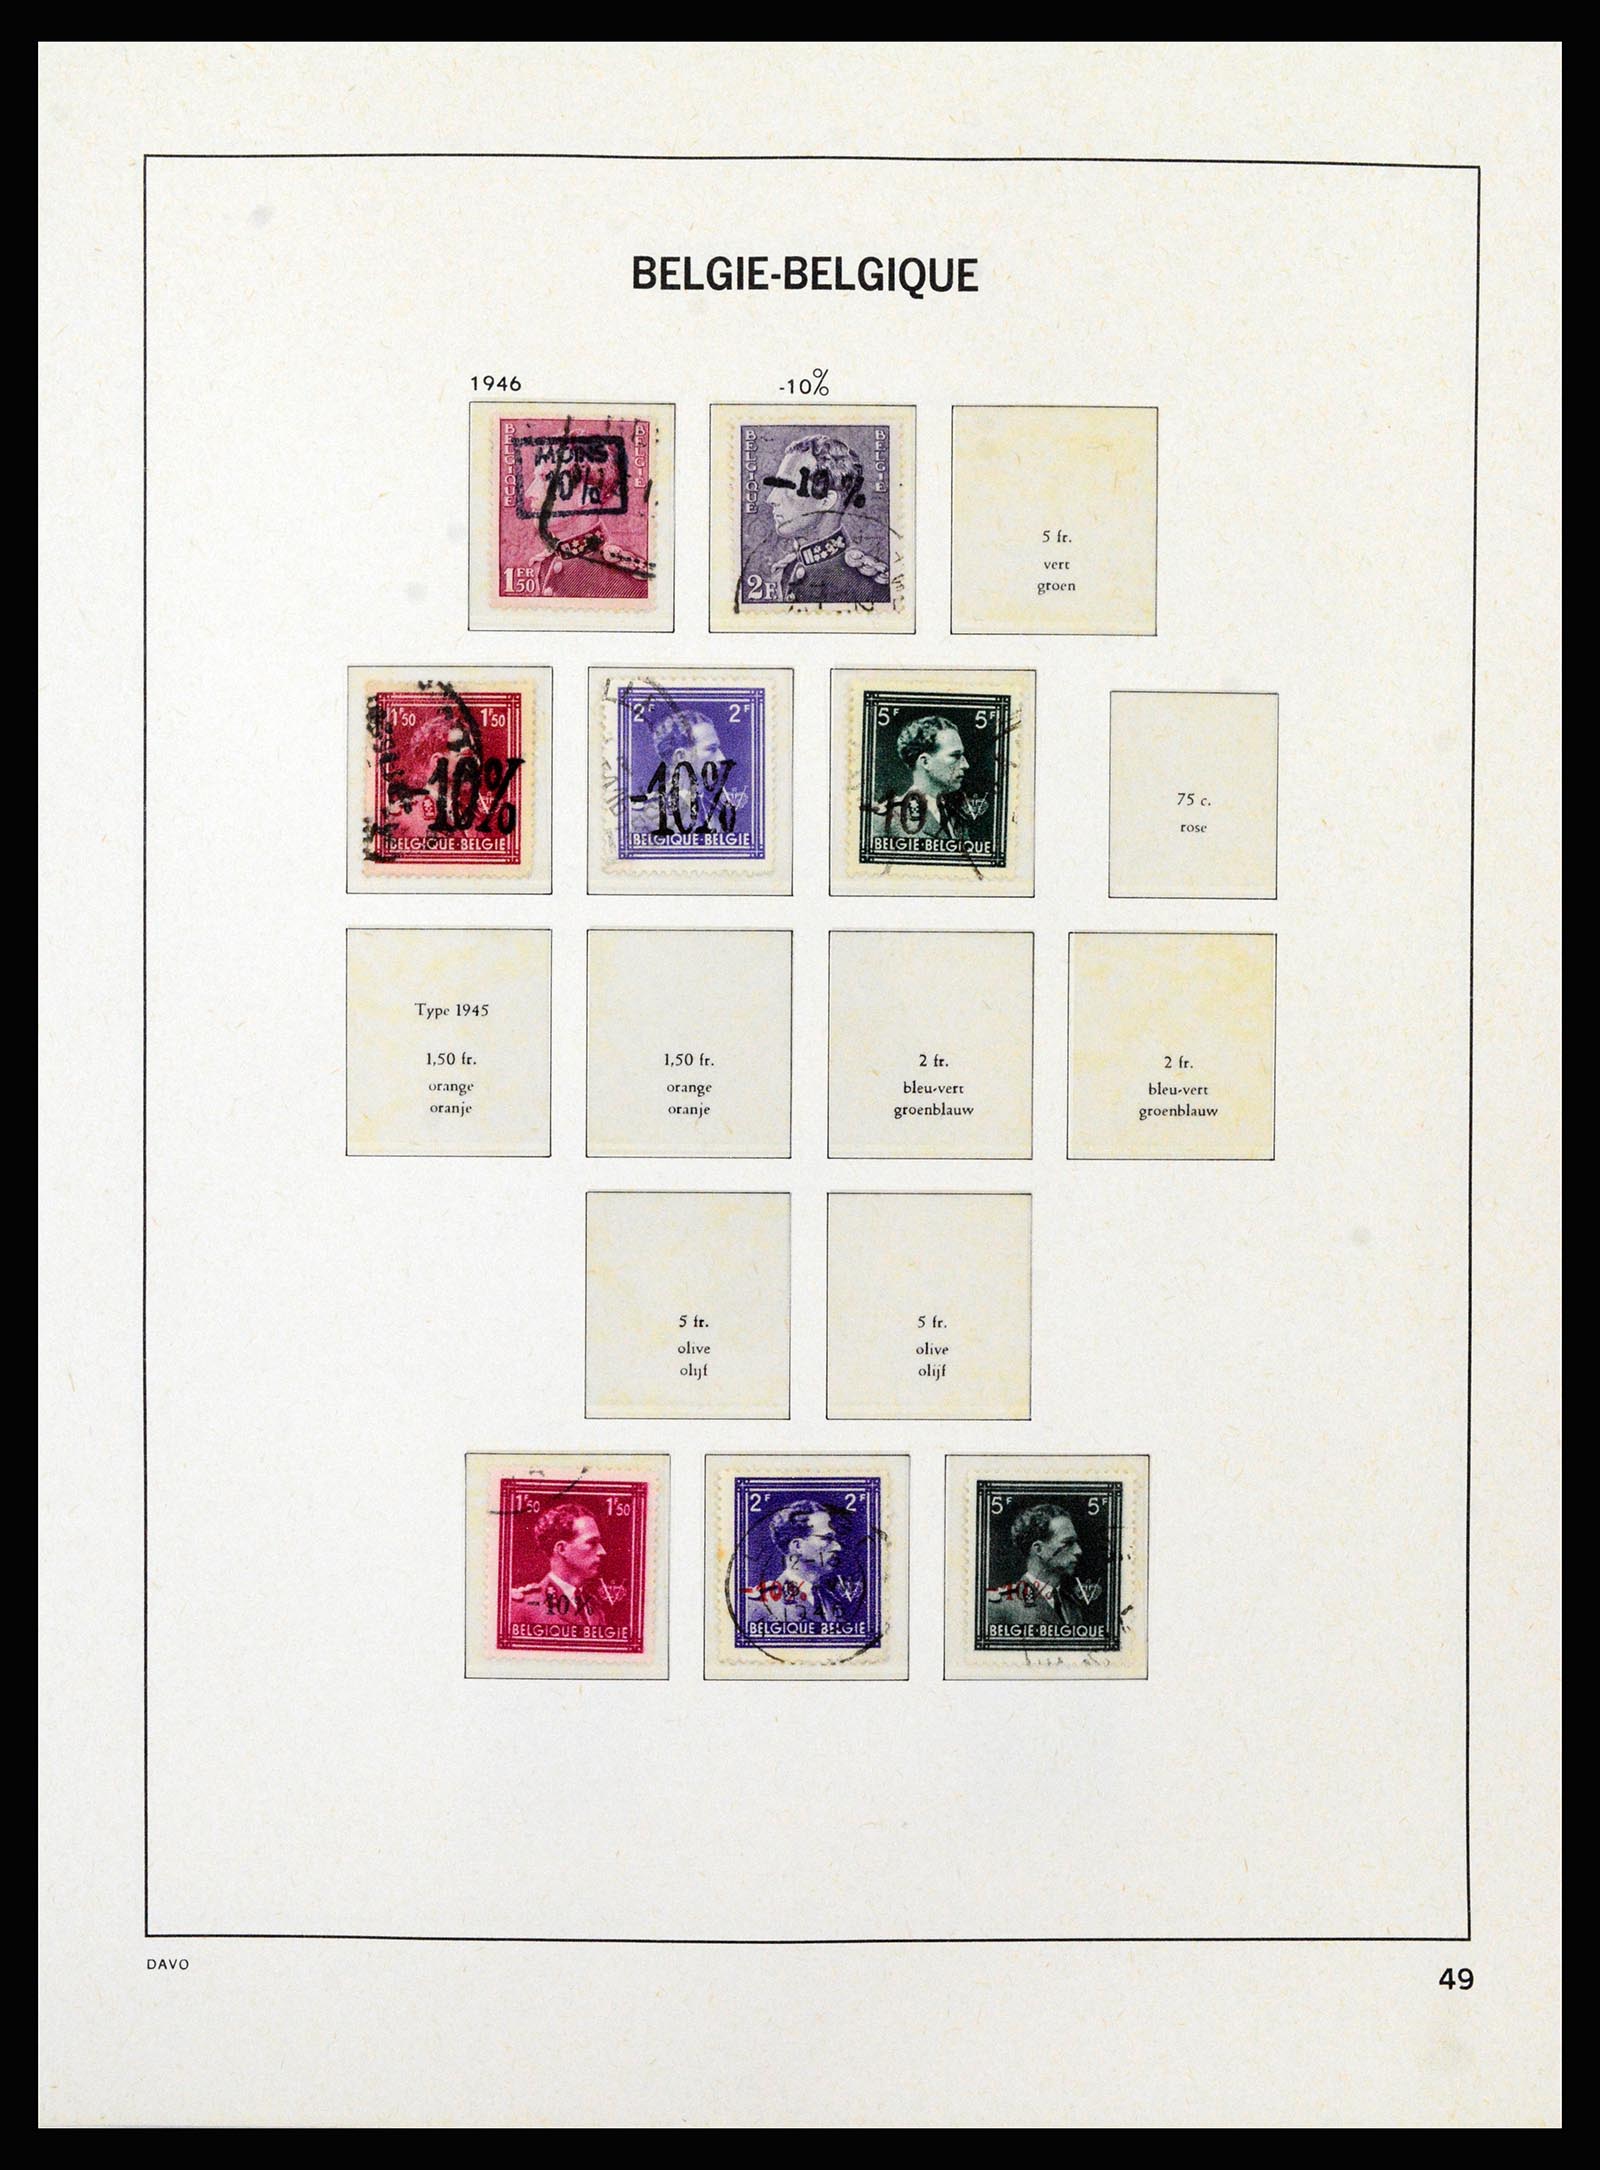 37189 051 - Stamp collection 37189 Belgium 1849-2006.